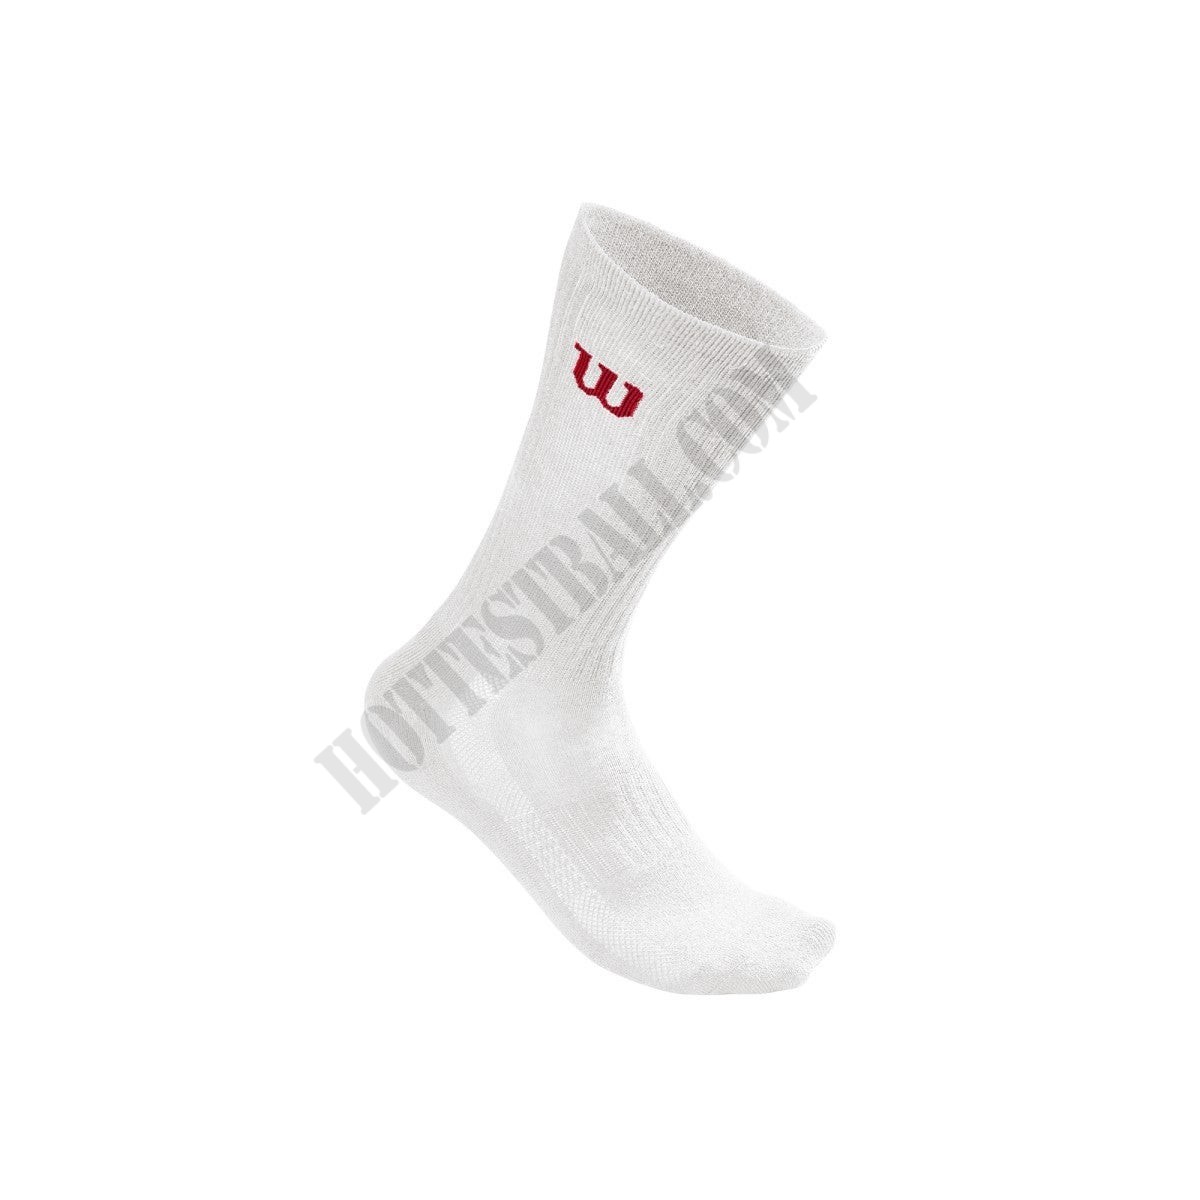 Men's White Crew Sock - 3 Pair - Wilson Discount Store - Men's White Crew Sock - 3 Pair - Wilson Discount Store